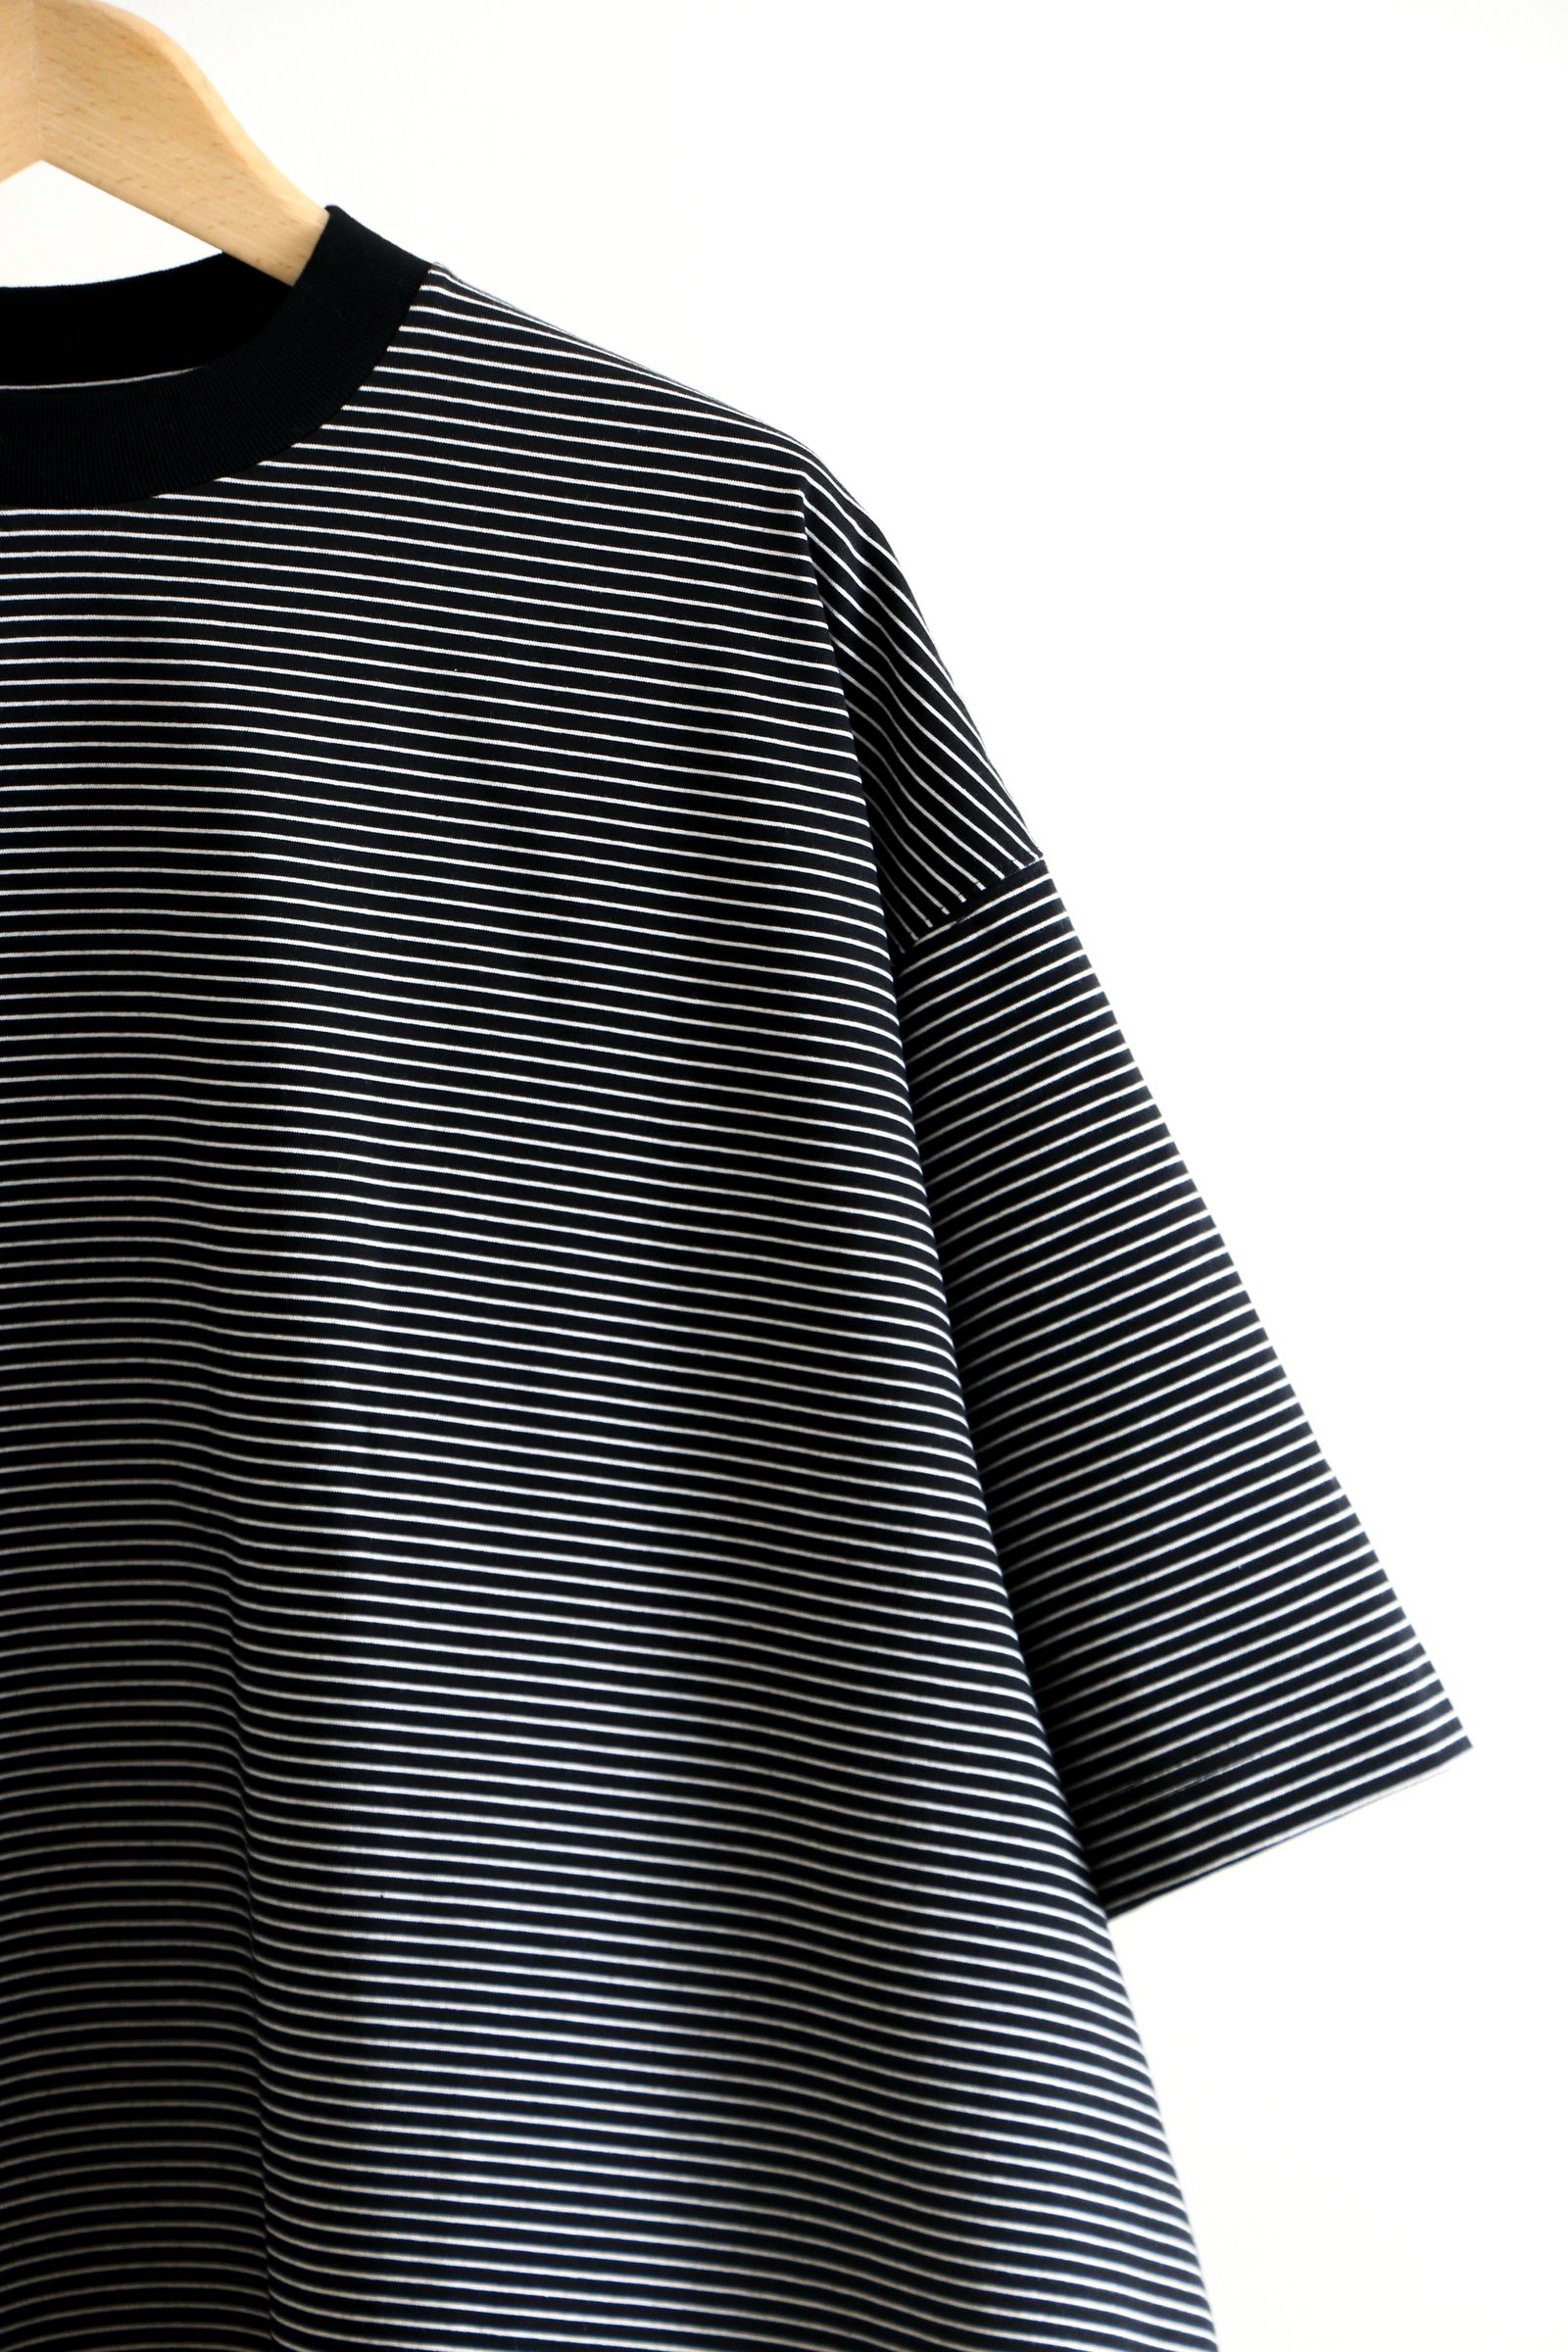 is-ness - BALLOON T SHIRT BLACK x WHITE / バルーンTシャツ 